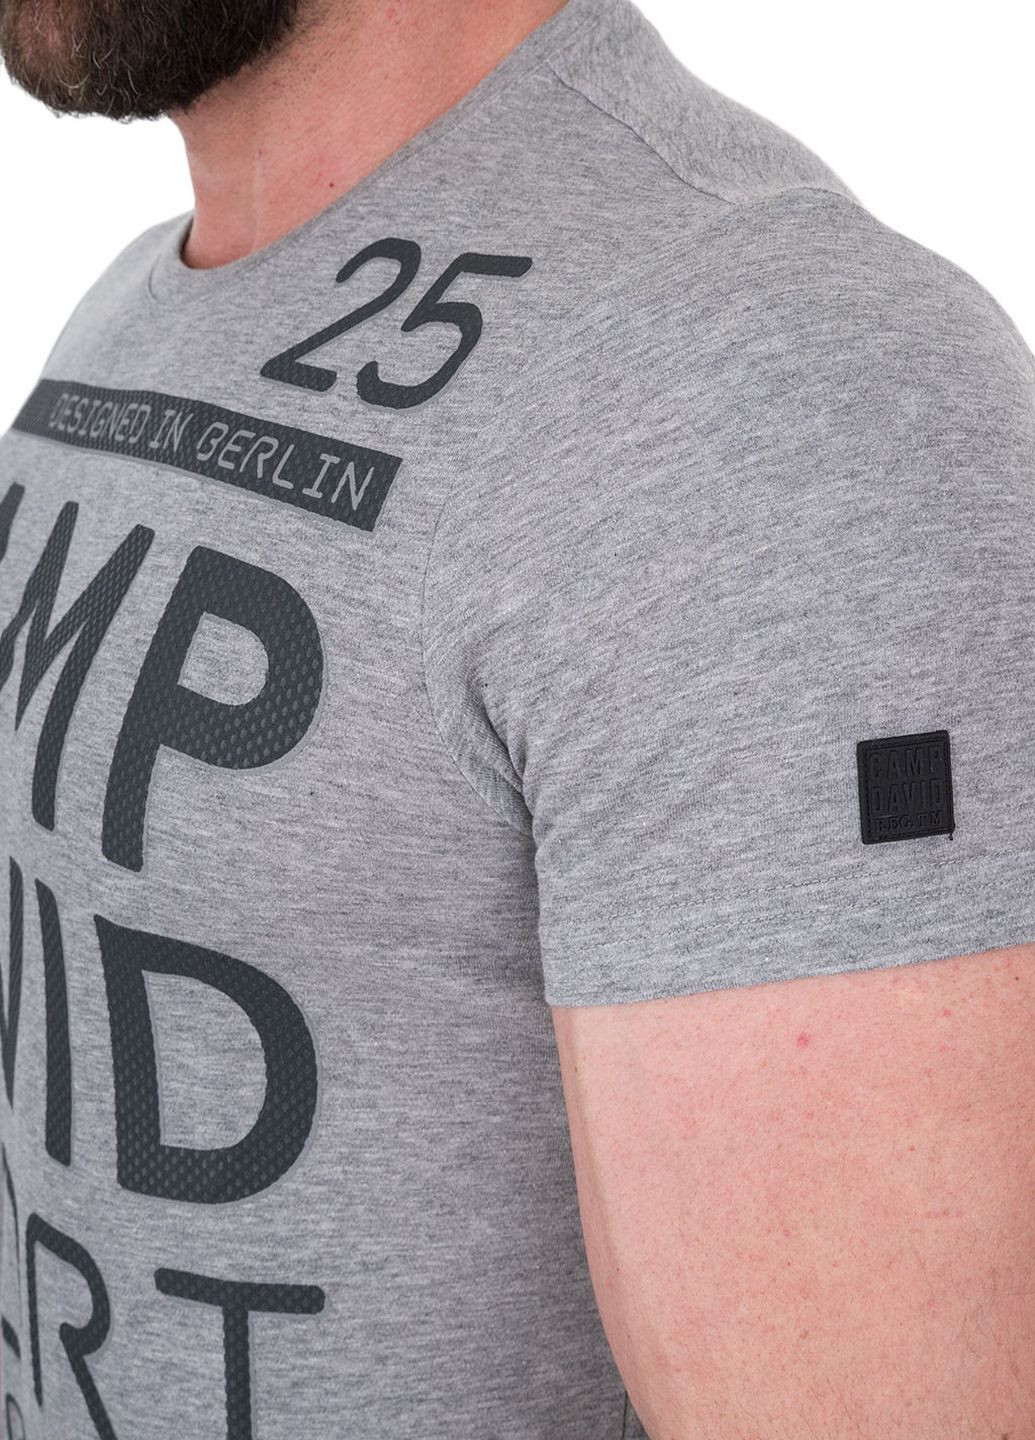 Сіра футболка Camp David